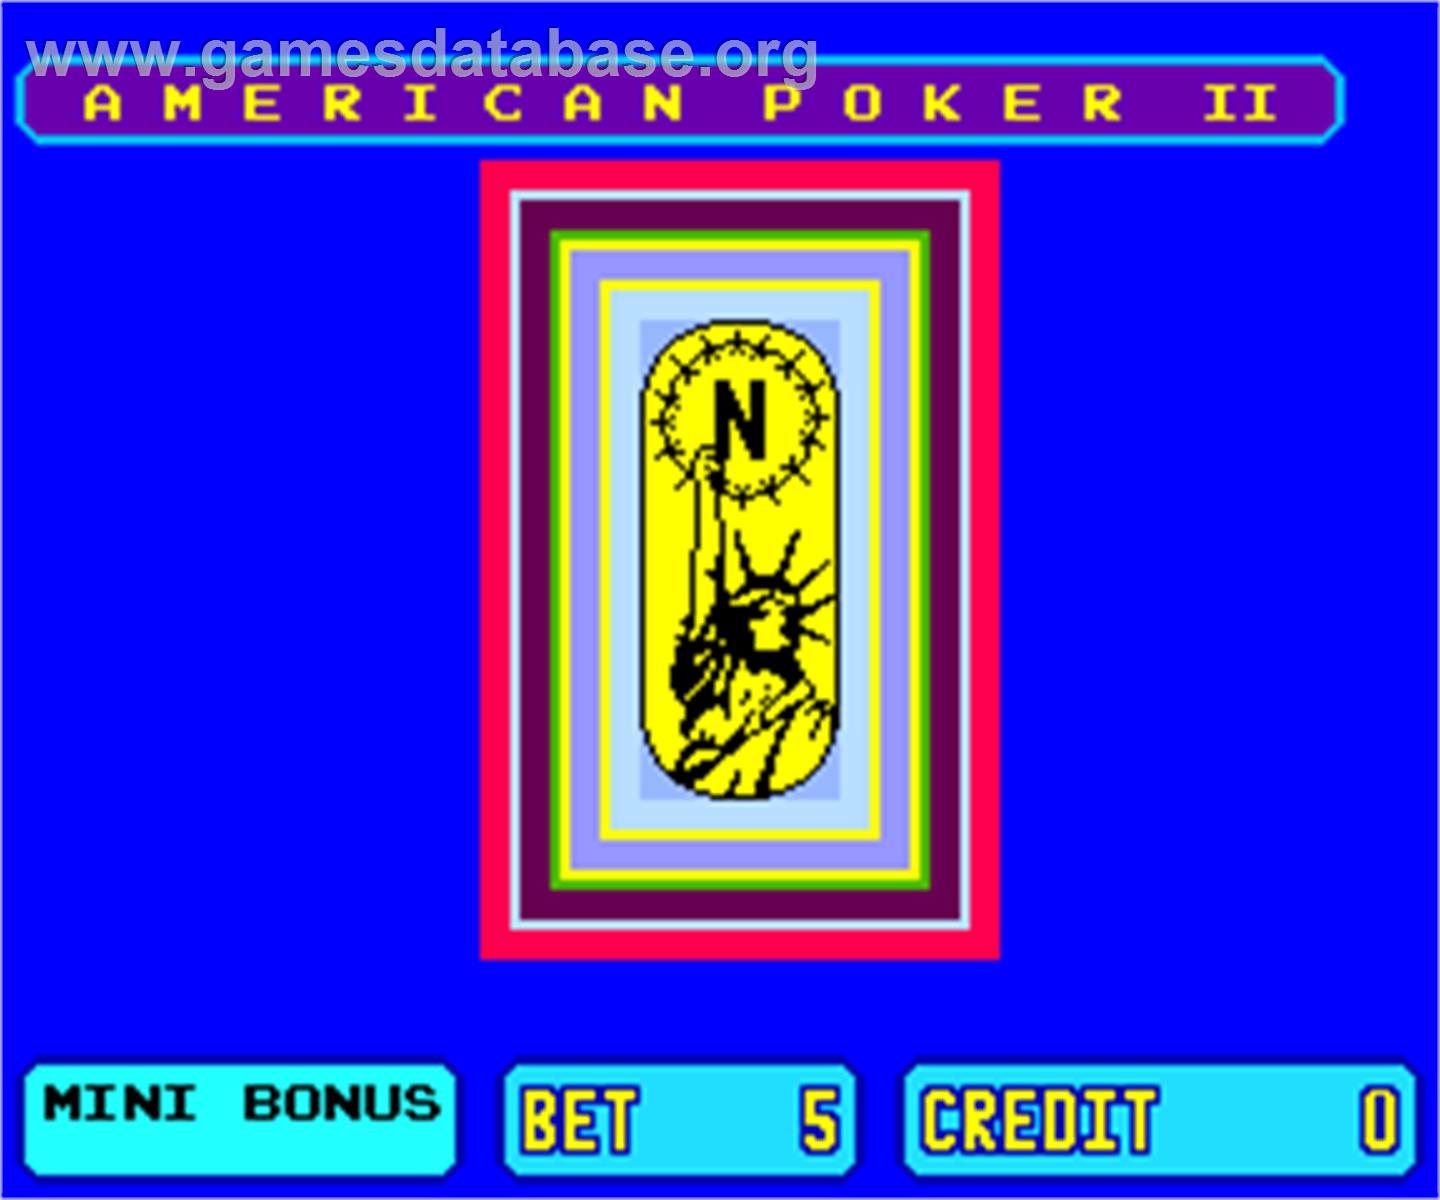 American Poker II - Arcade - Artwork - Title Screen